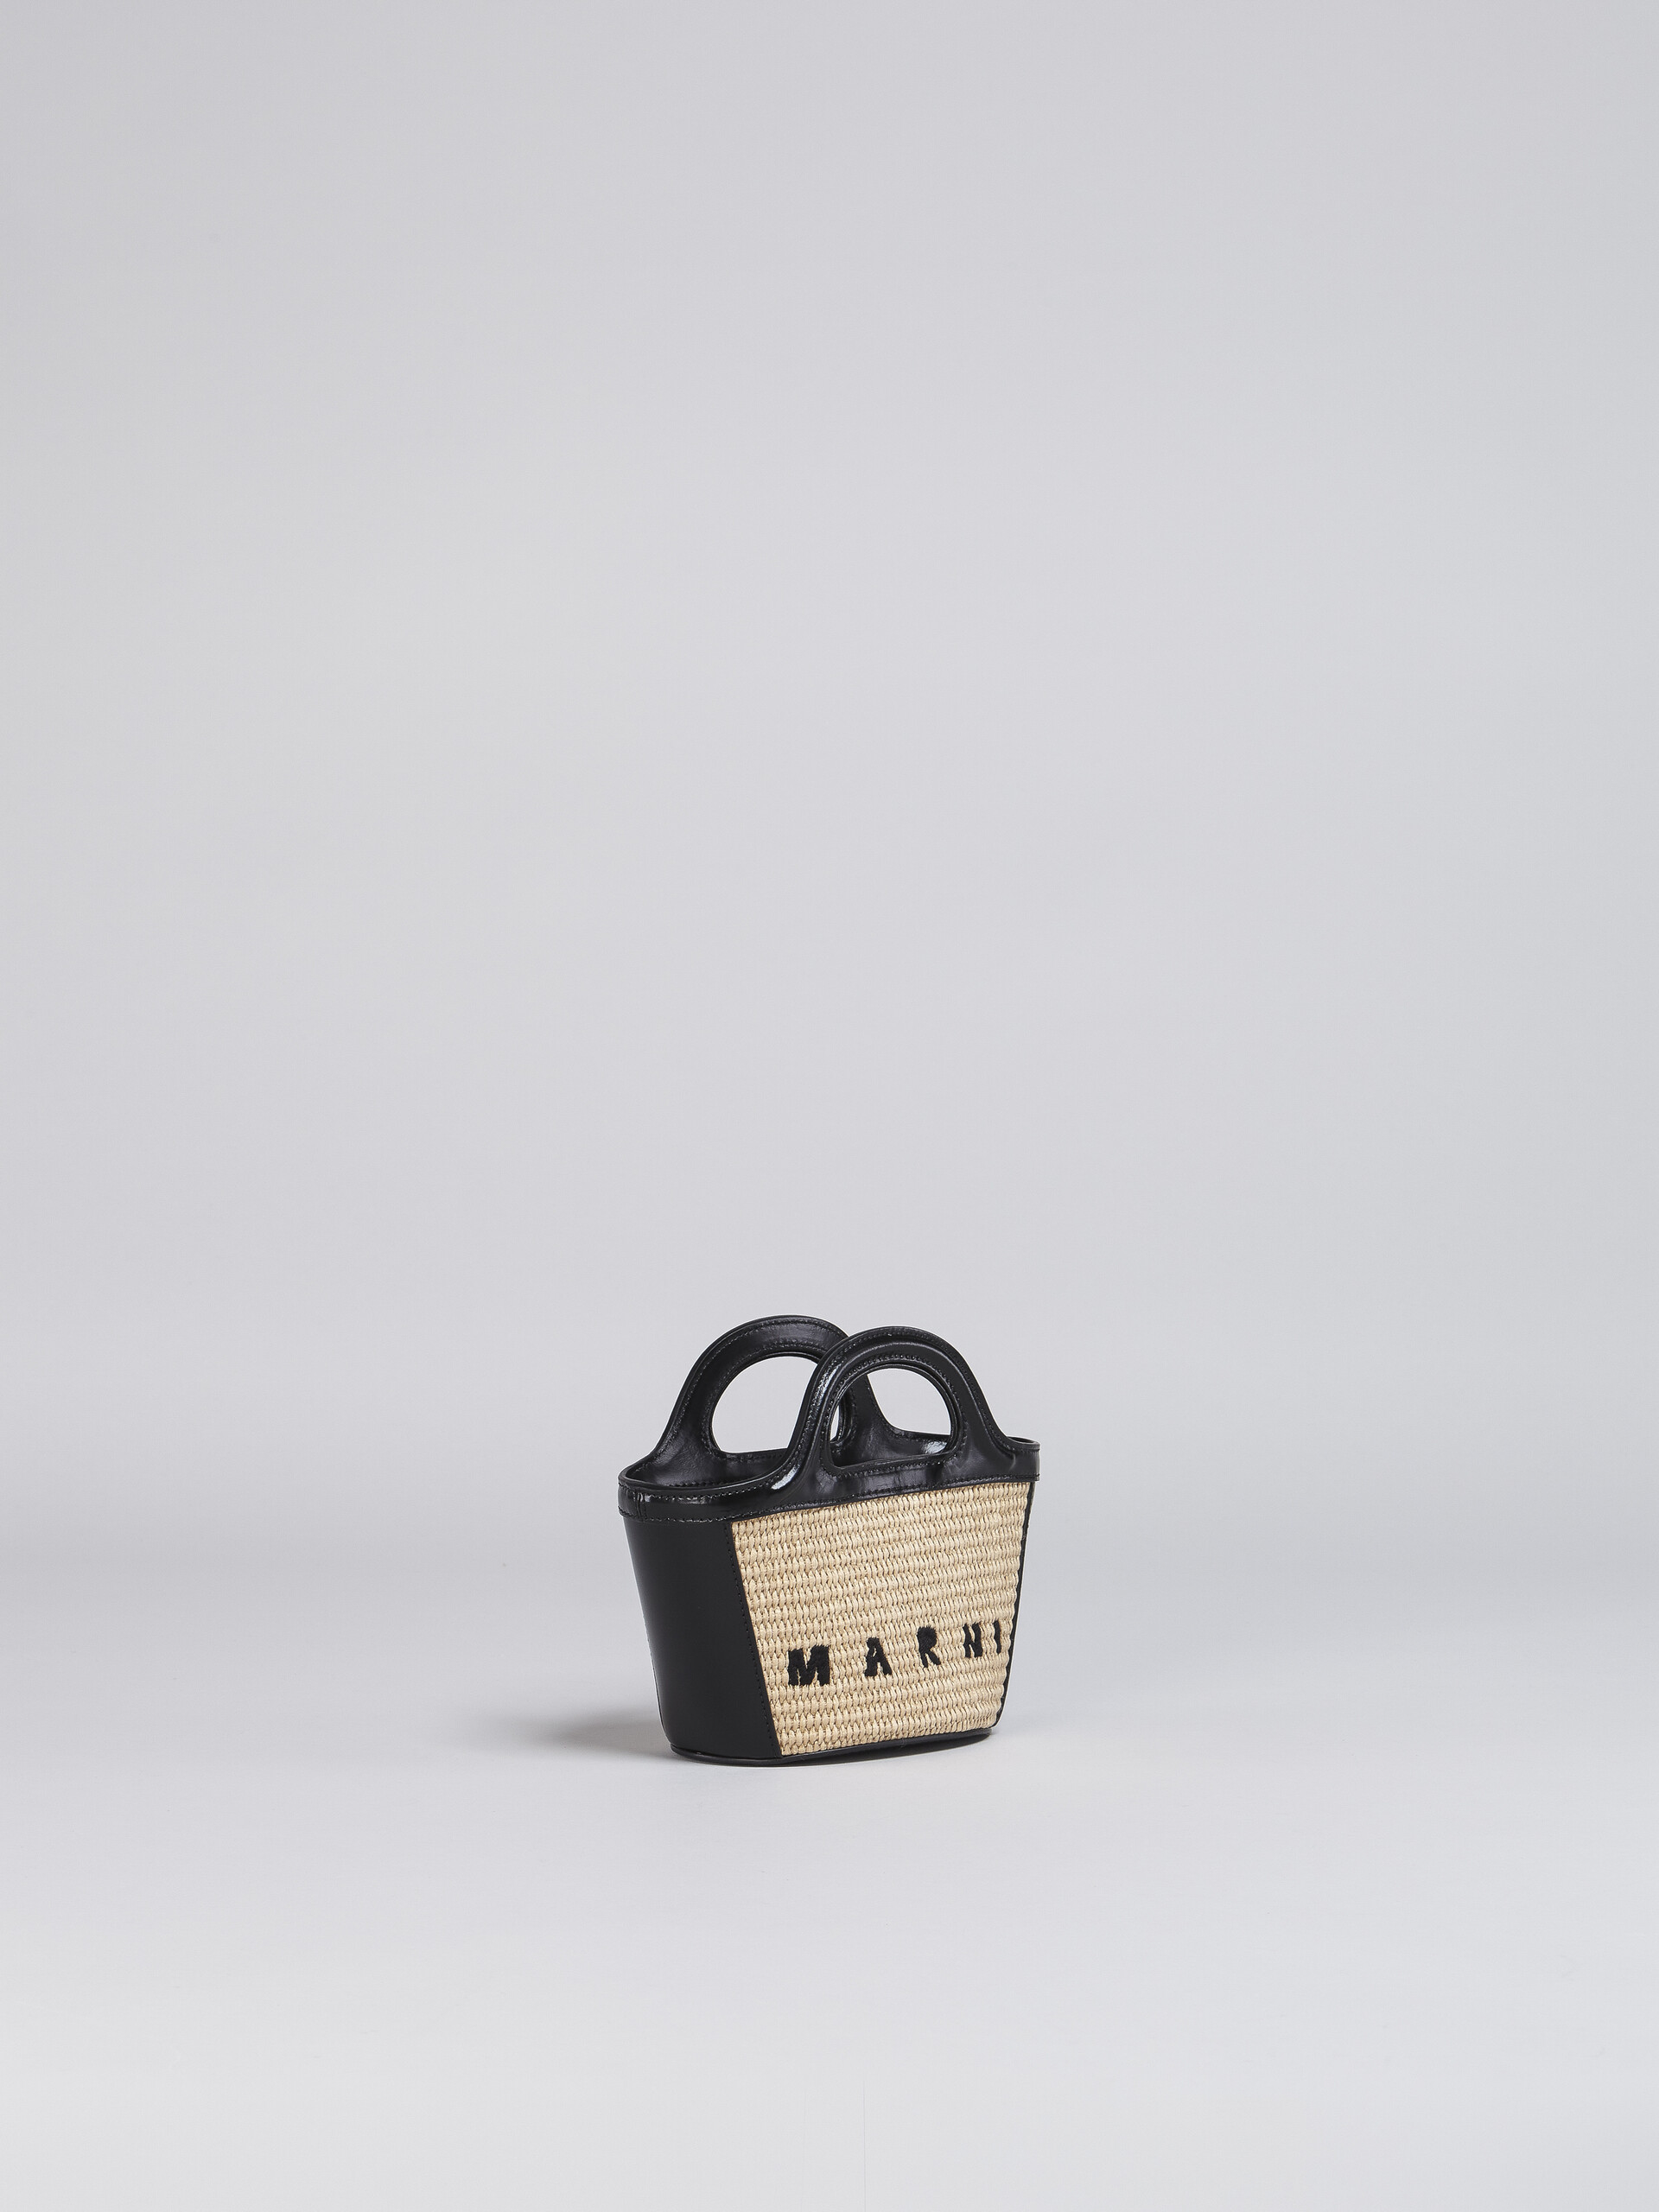 TROPICALIA micro bag in black leather and raffia - Handbag - Image 5